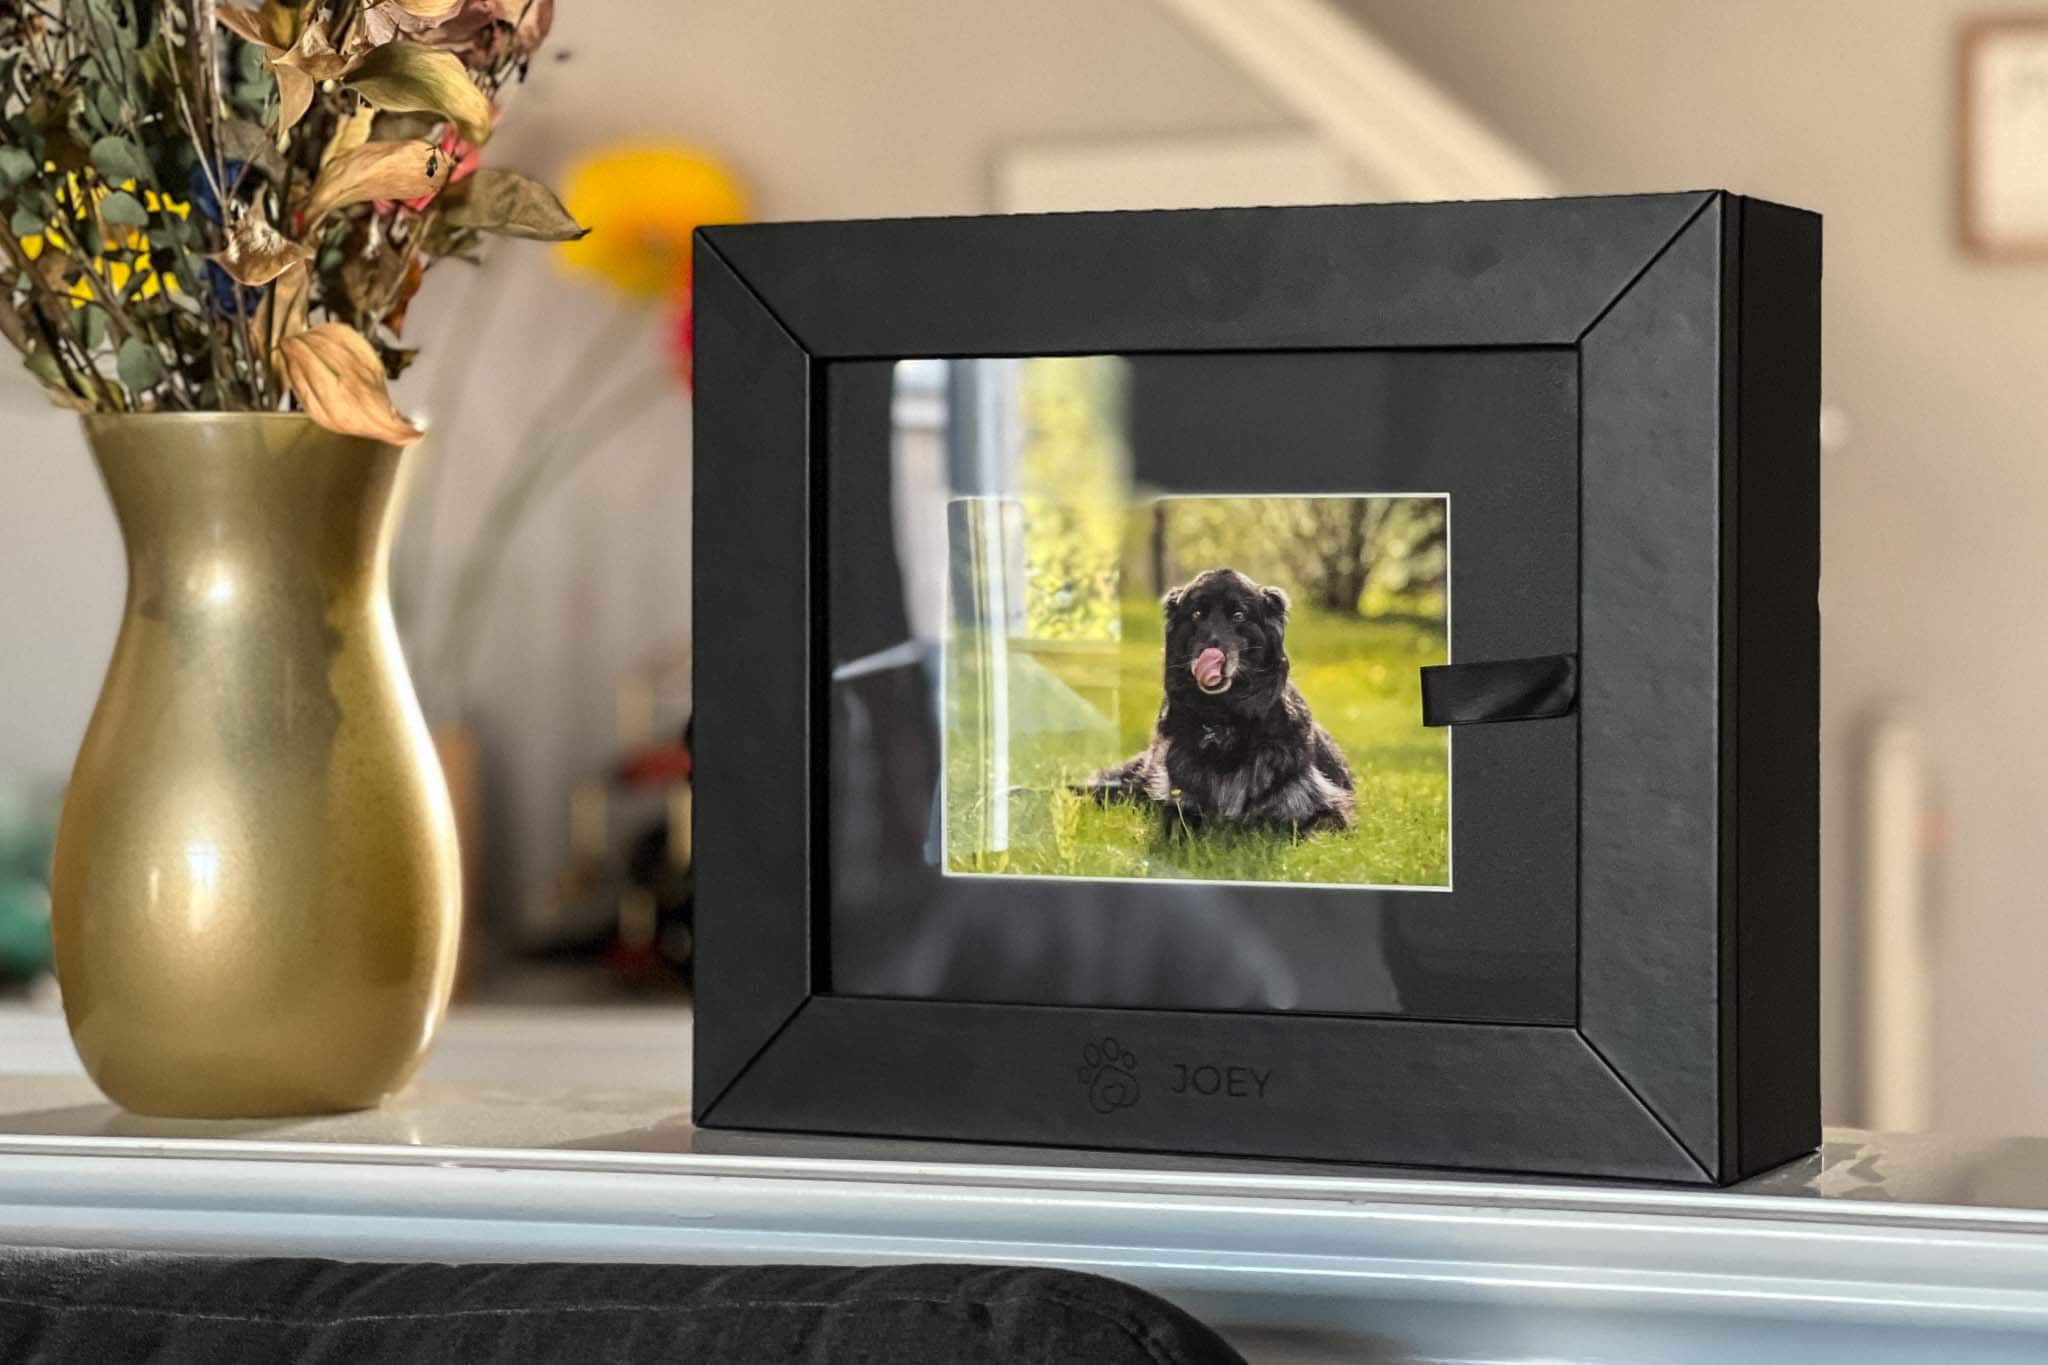 Memorial portrait keepsake window box with a dog portrait inside